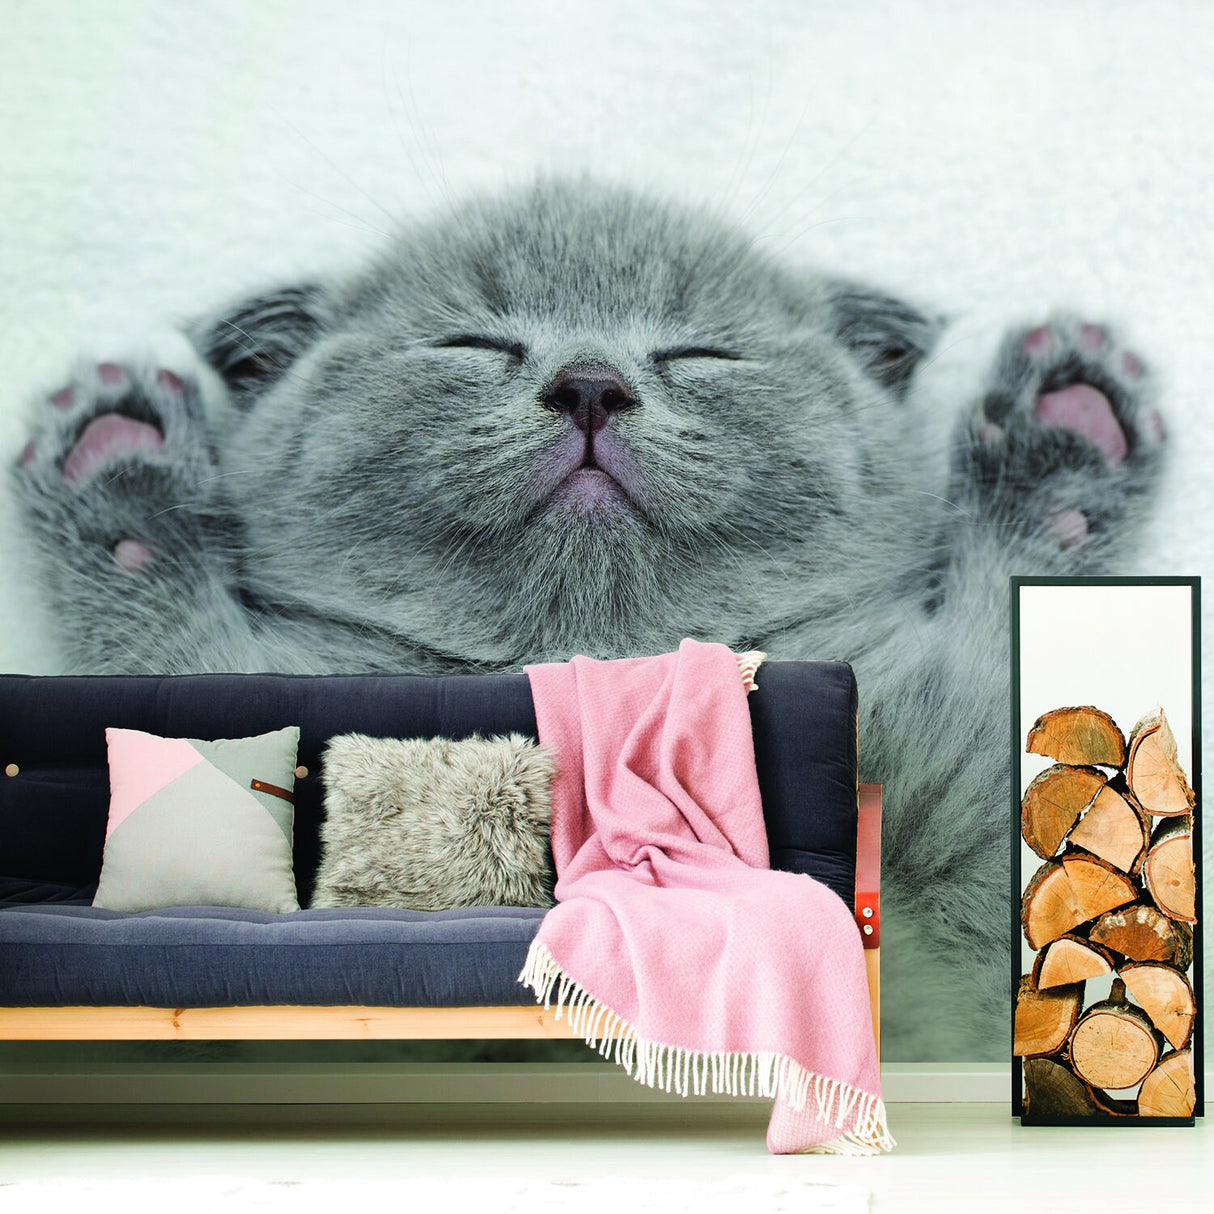 Cat Wallpaper Vinyl Decal Decor - Home Bedroom Peel And Stick Removable Gray Kitten Art Wall Sticker